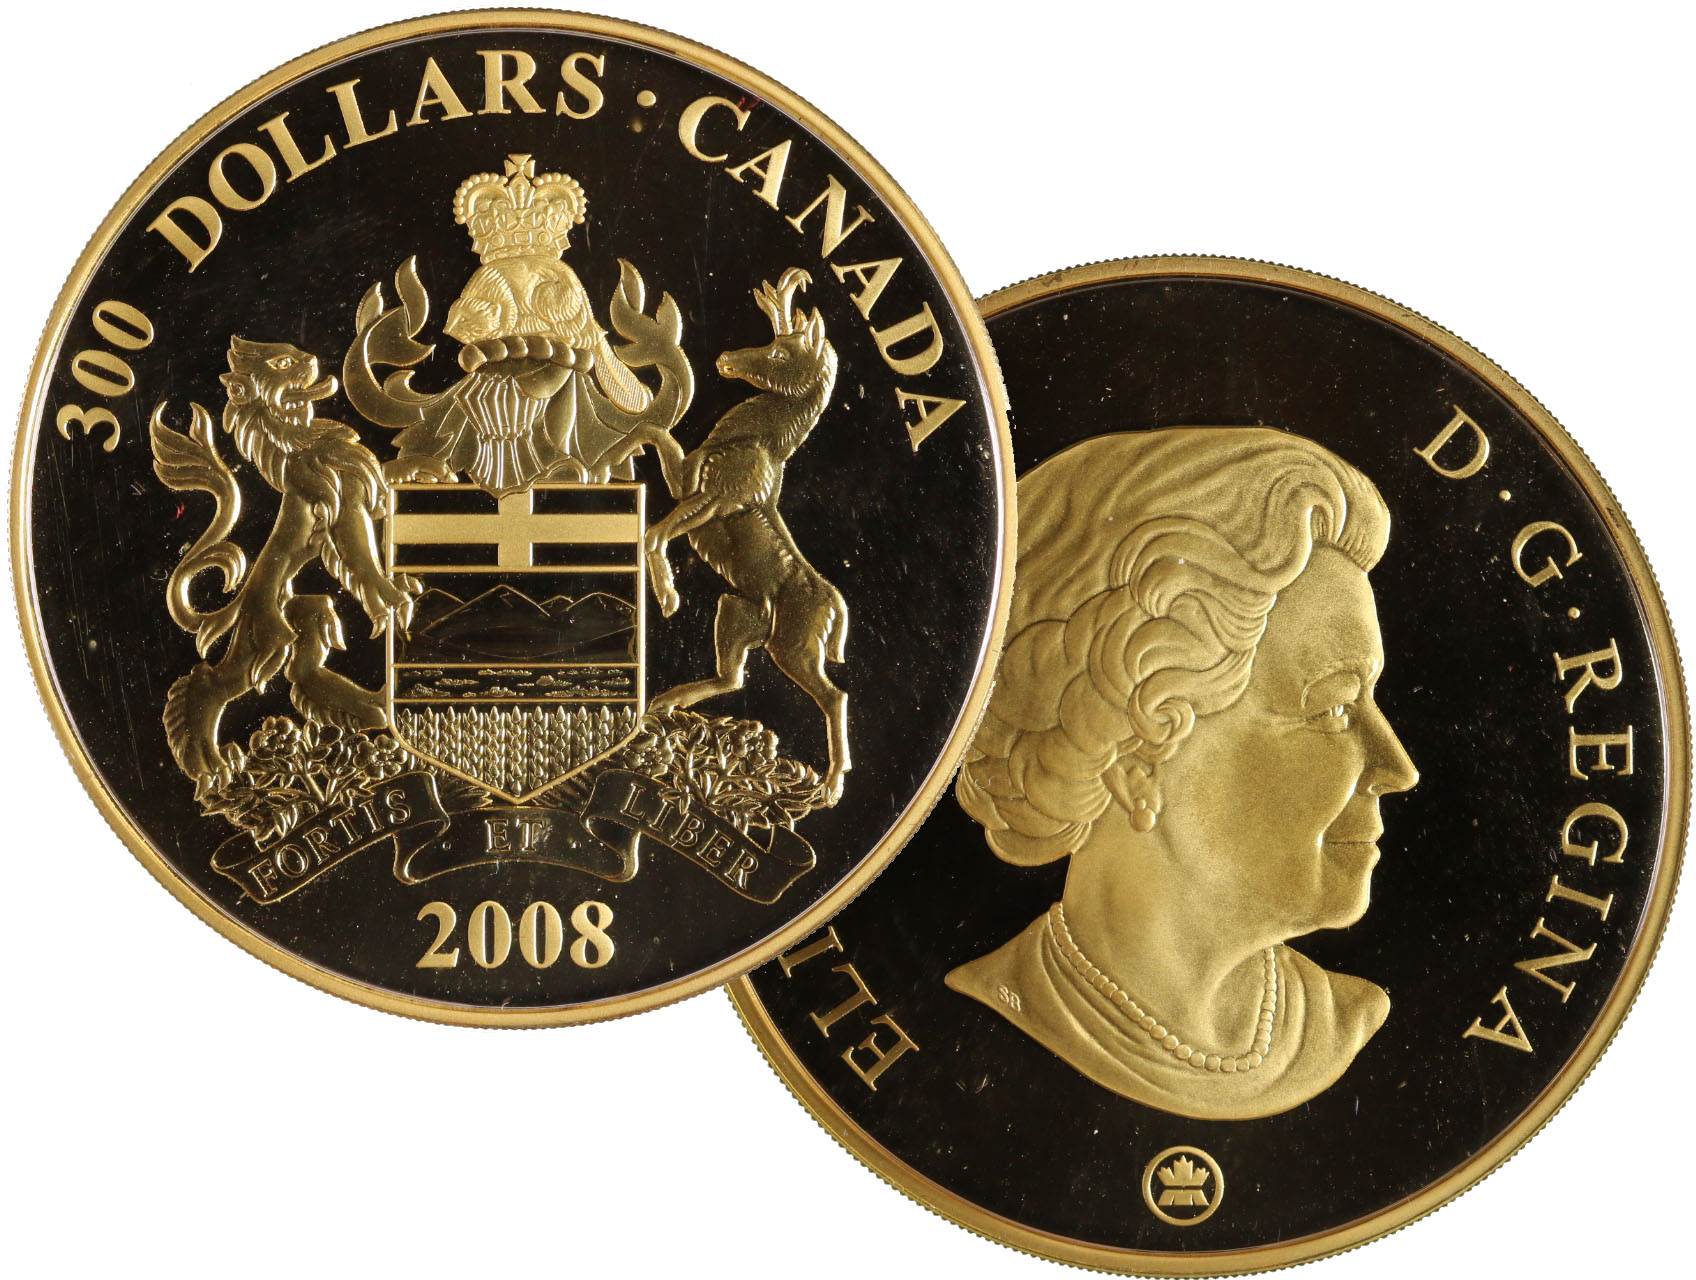 Kanada - 300 Dollar 2008, 60g, Au 583.3/1000, 50mm, náklad 1000 ks. certifikát, etue